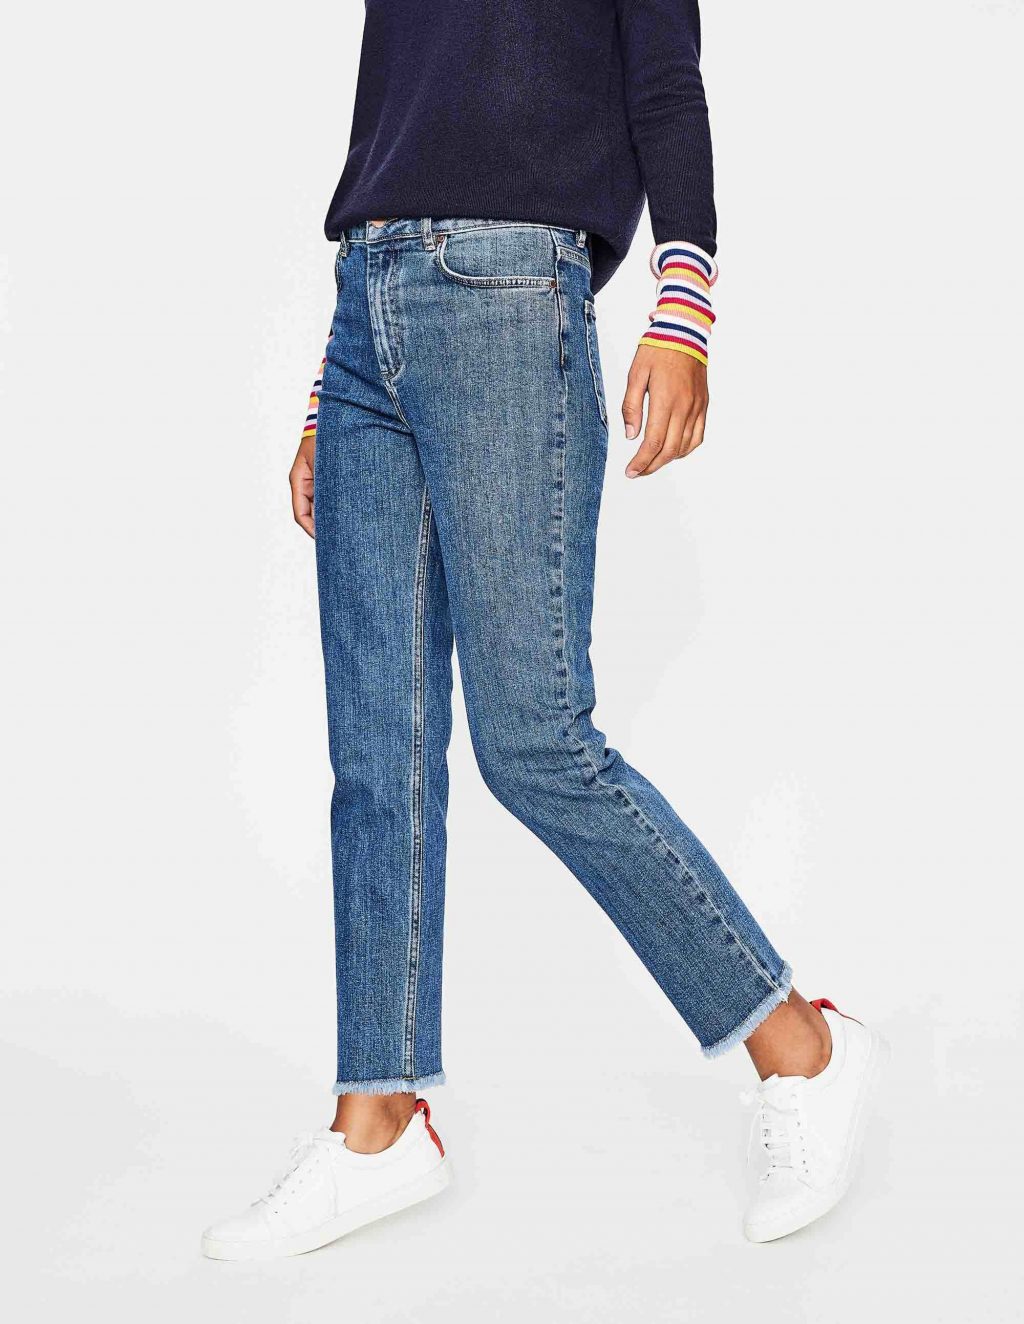 Spring / Summer 18 jeans